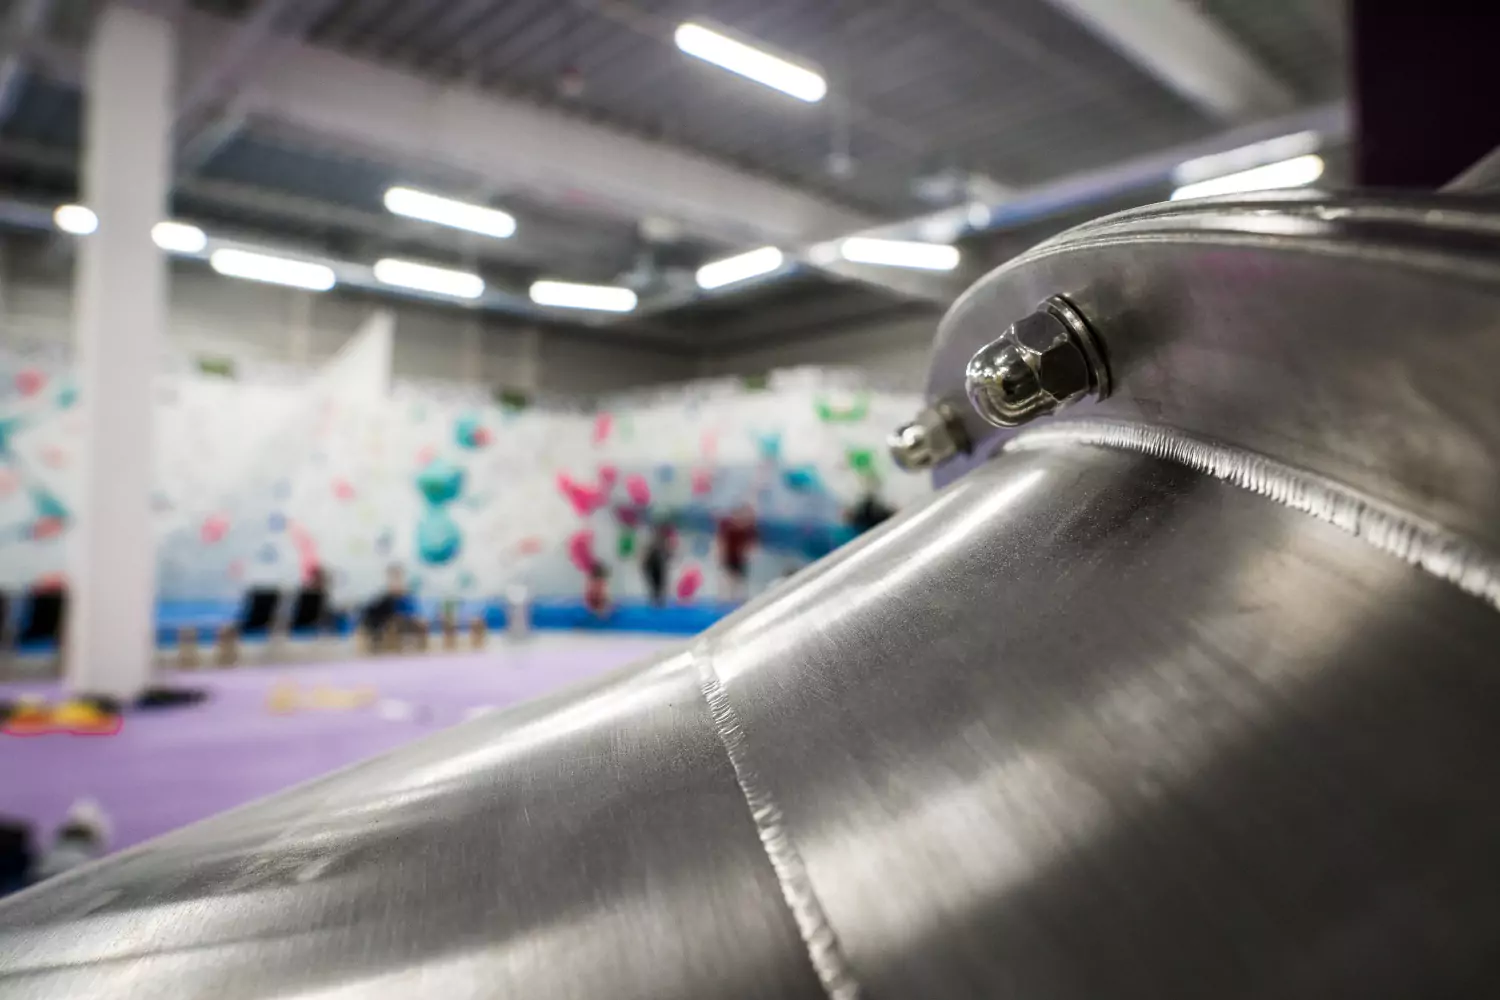 Steel slide with climbing walls in an indoor sport hall